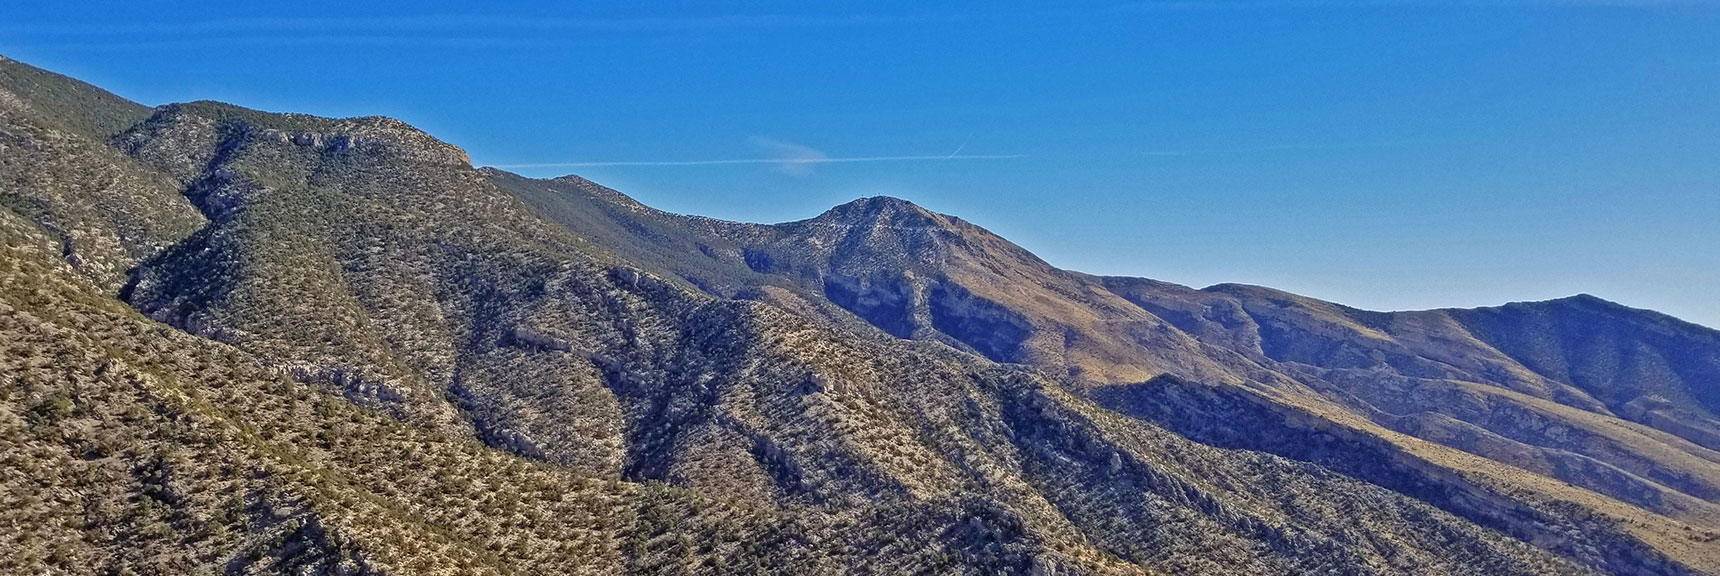 South Summit Viewed from Eastern Edge of 3rd Bluff | Potosi Mt. Summit via Western Cliffs Ridgeline, Spring Mountains, Nevada